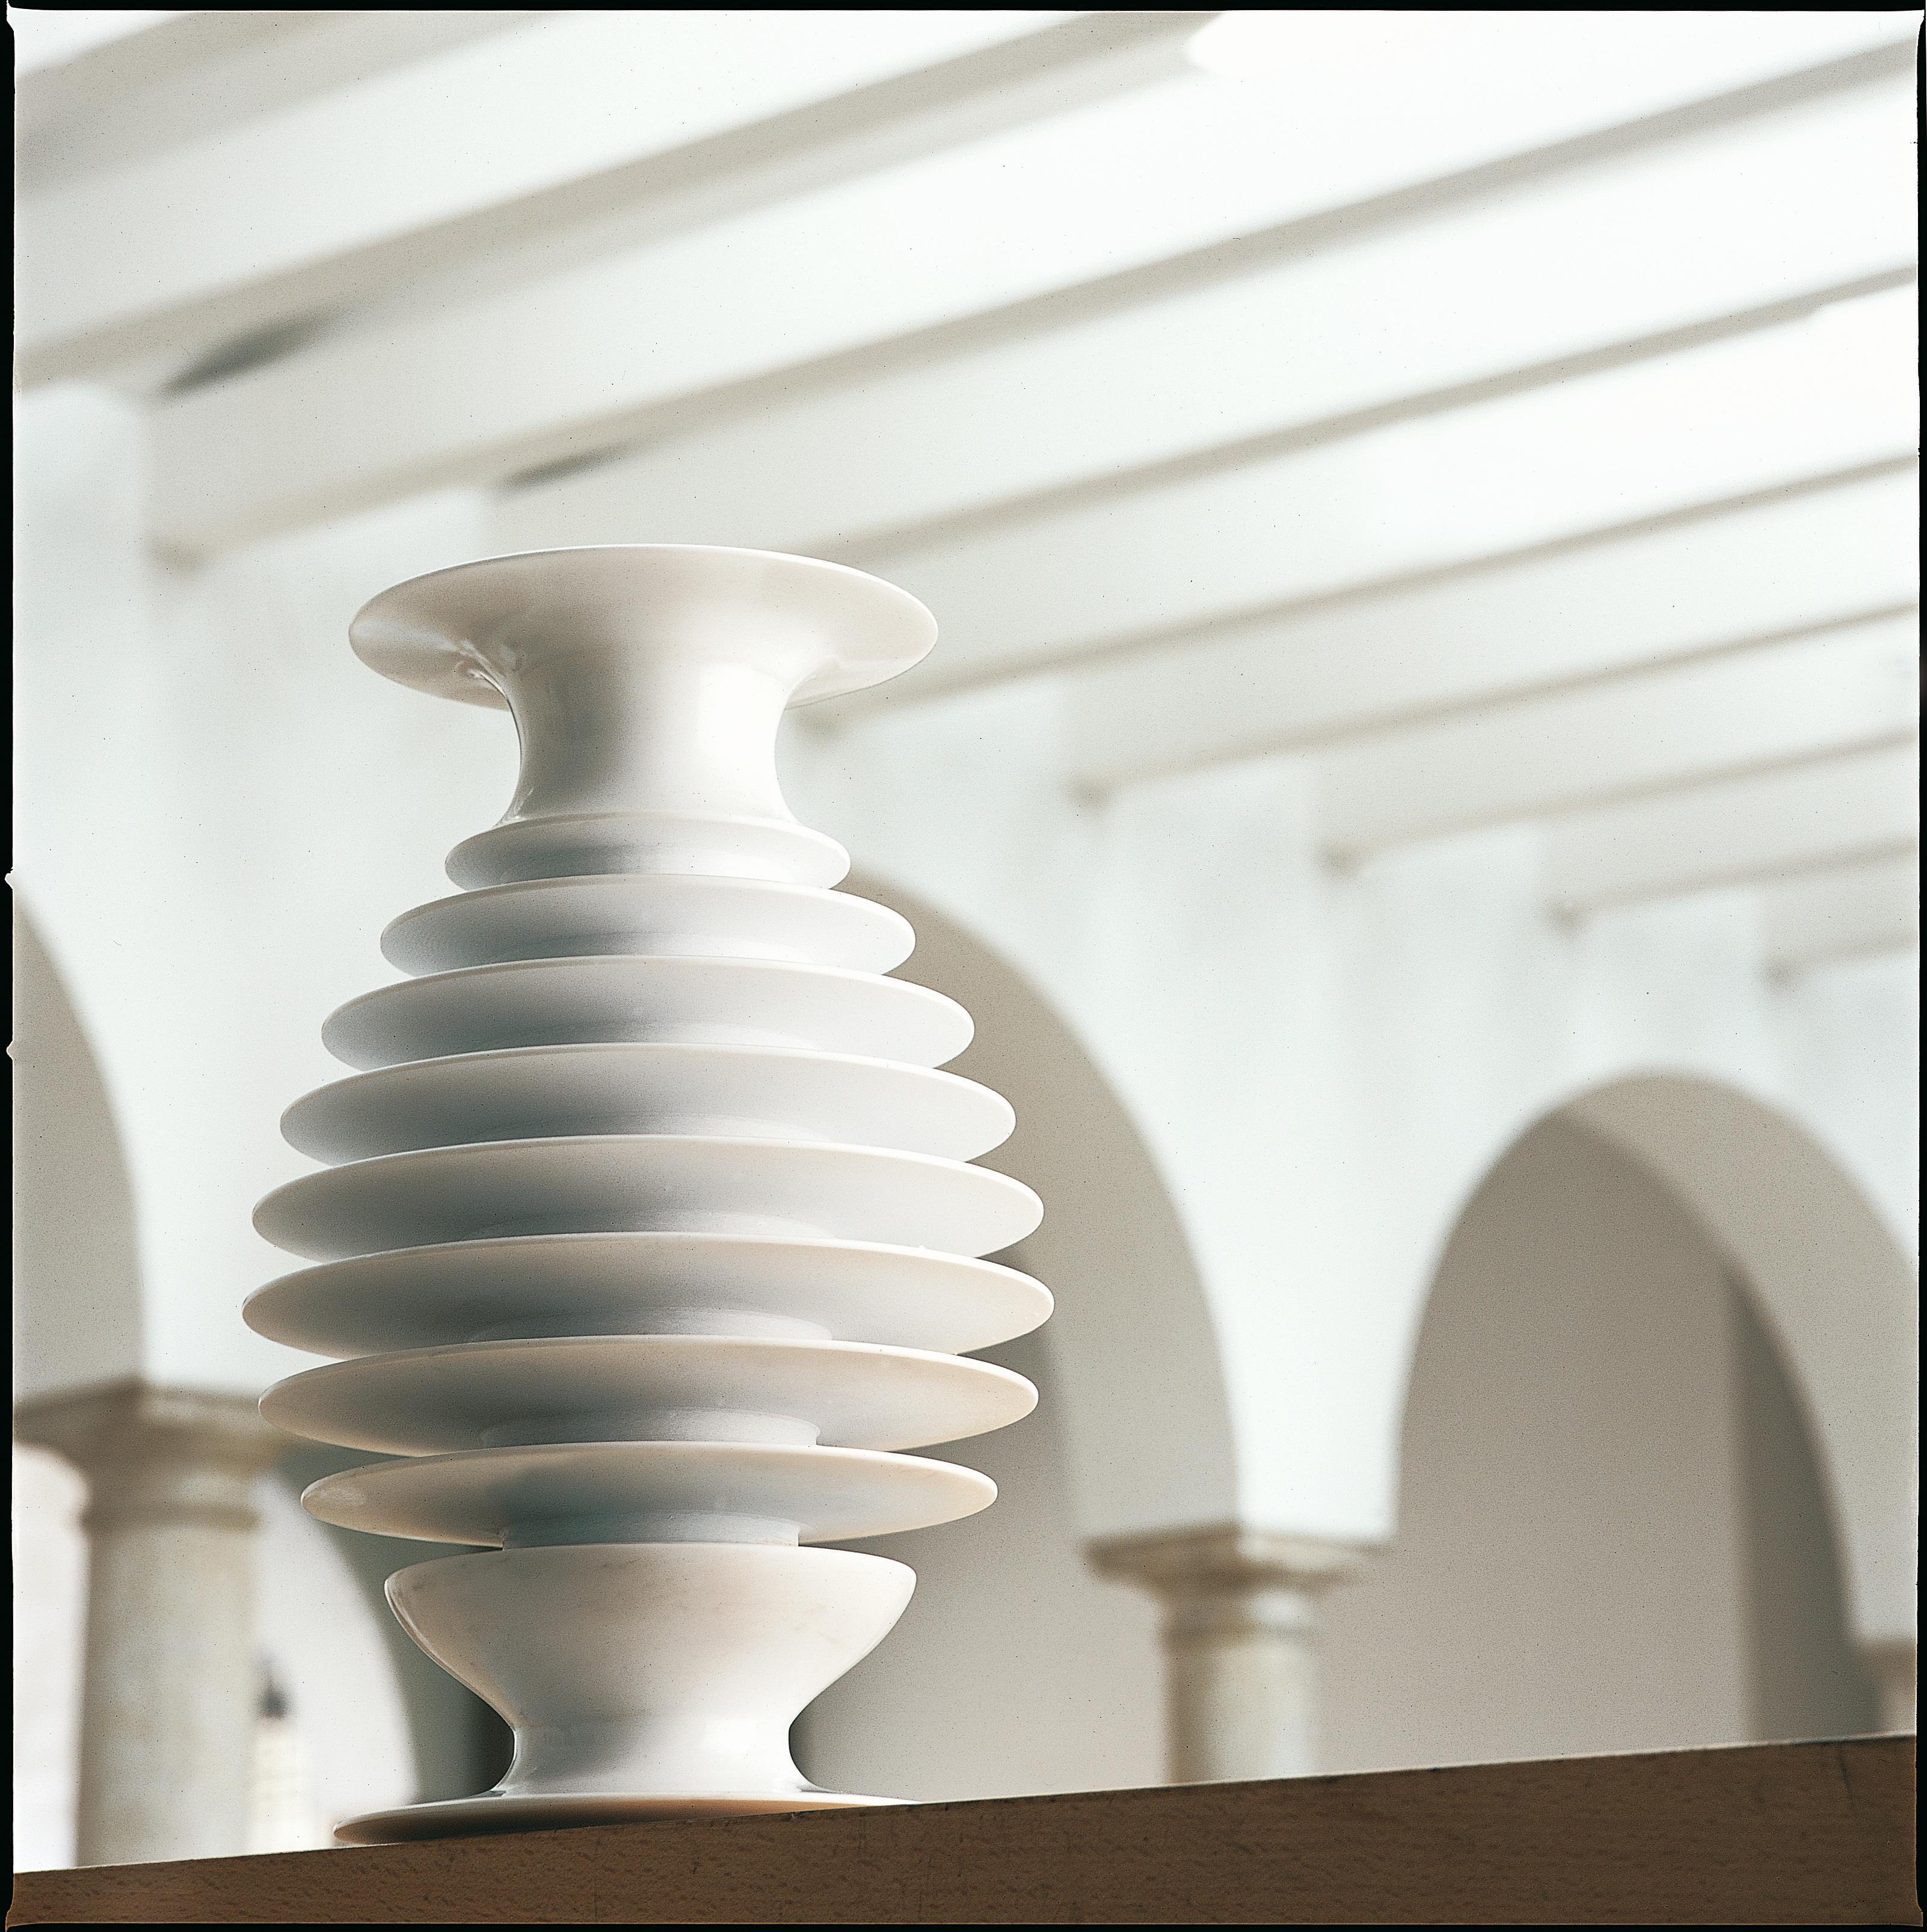 Ittio vase in Bianca Carrara marble designed by the Davani Group & Kreoo.